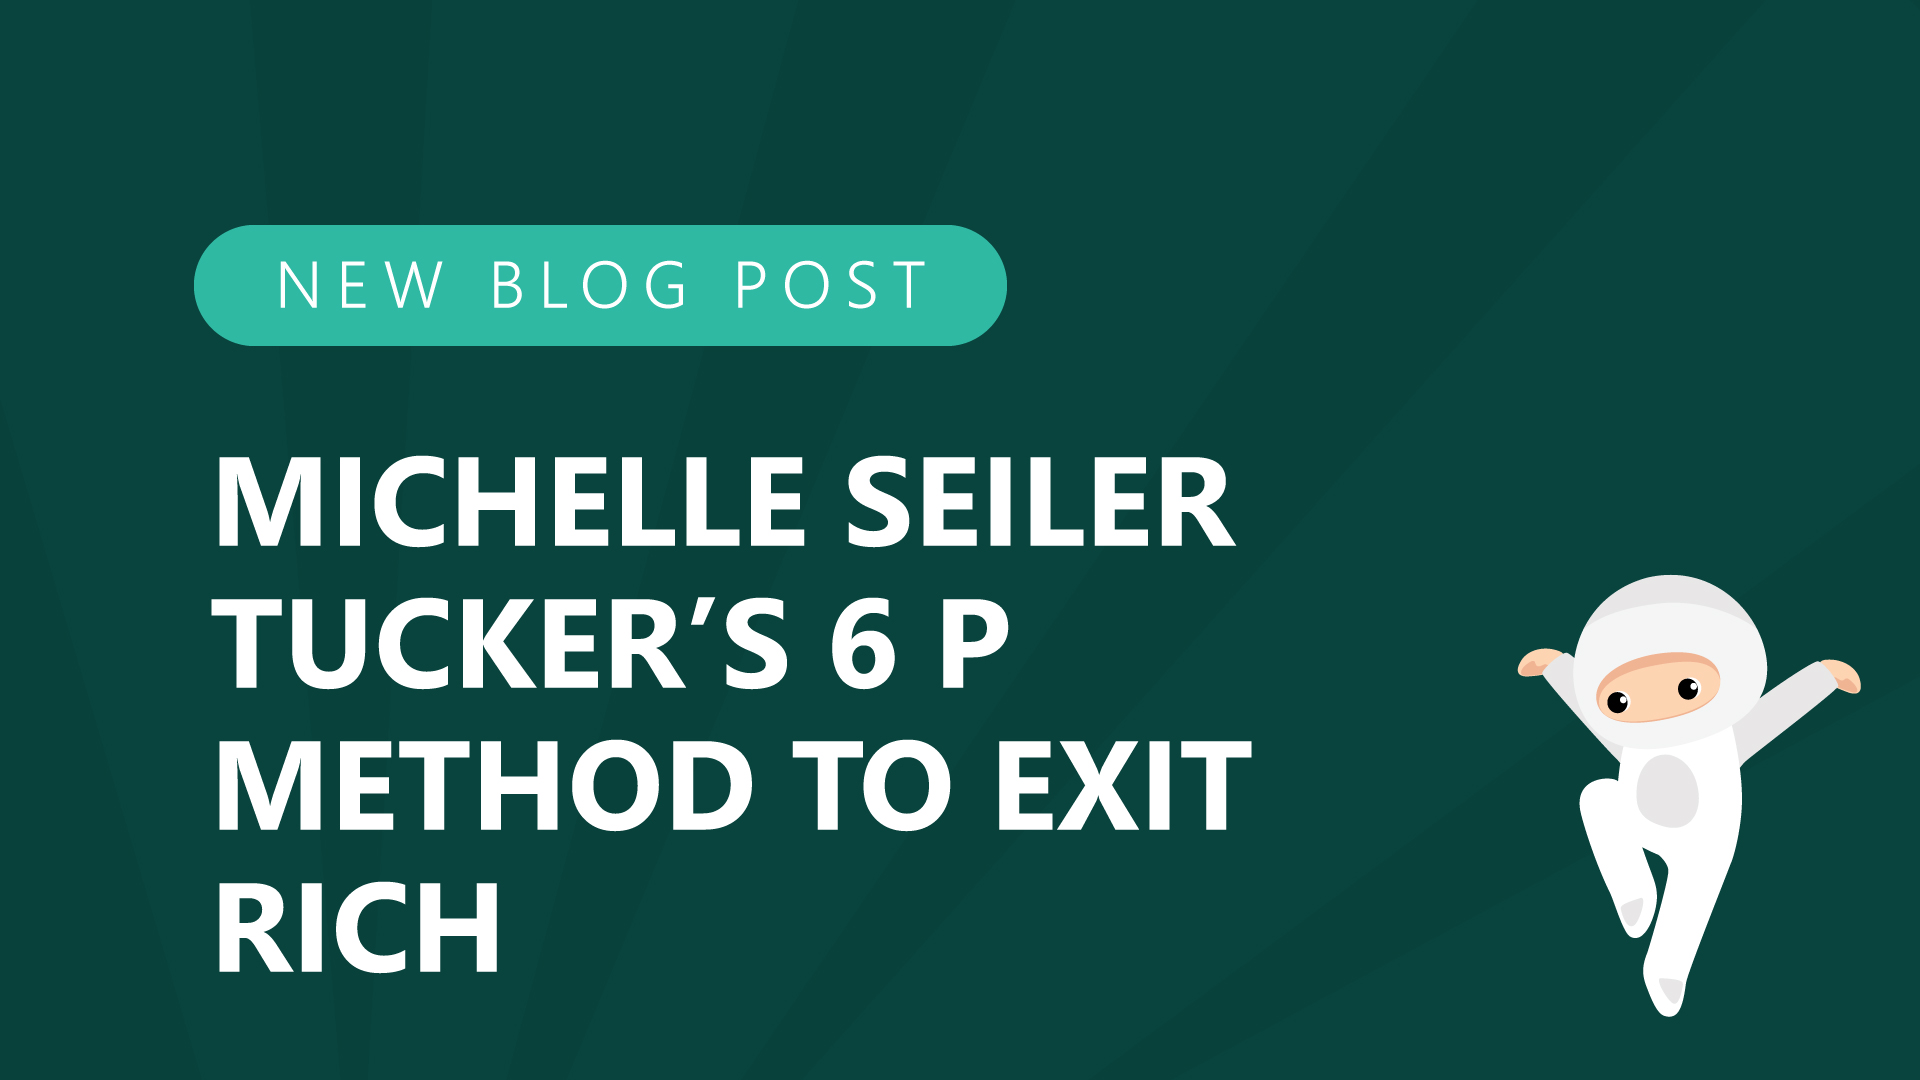 34-Michelle-Seiler-Tuckers-6-P-Method-to-Exit-Rich.jpg